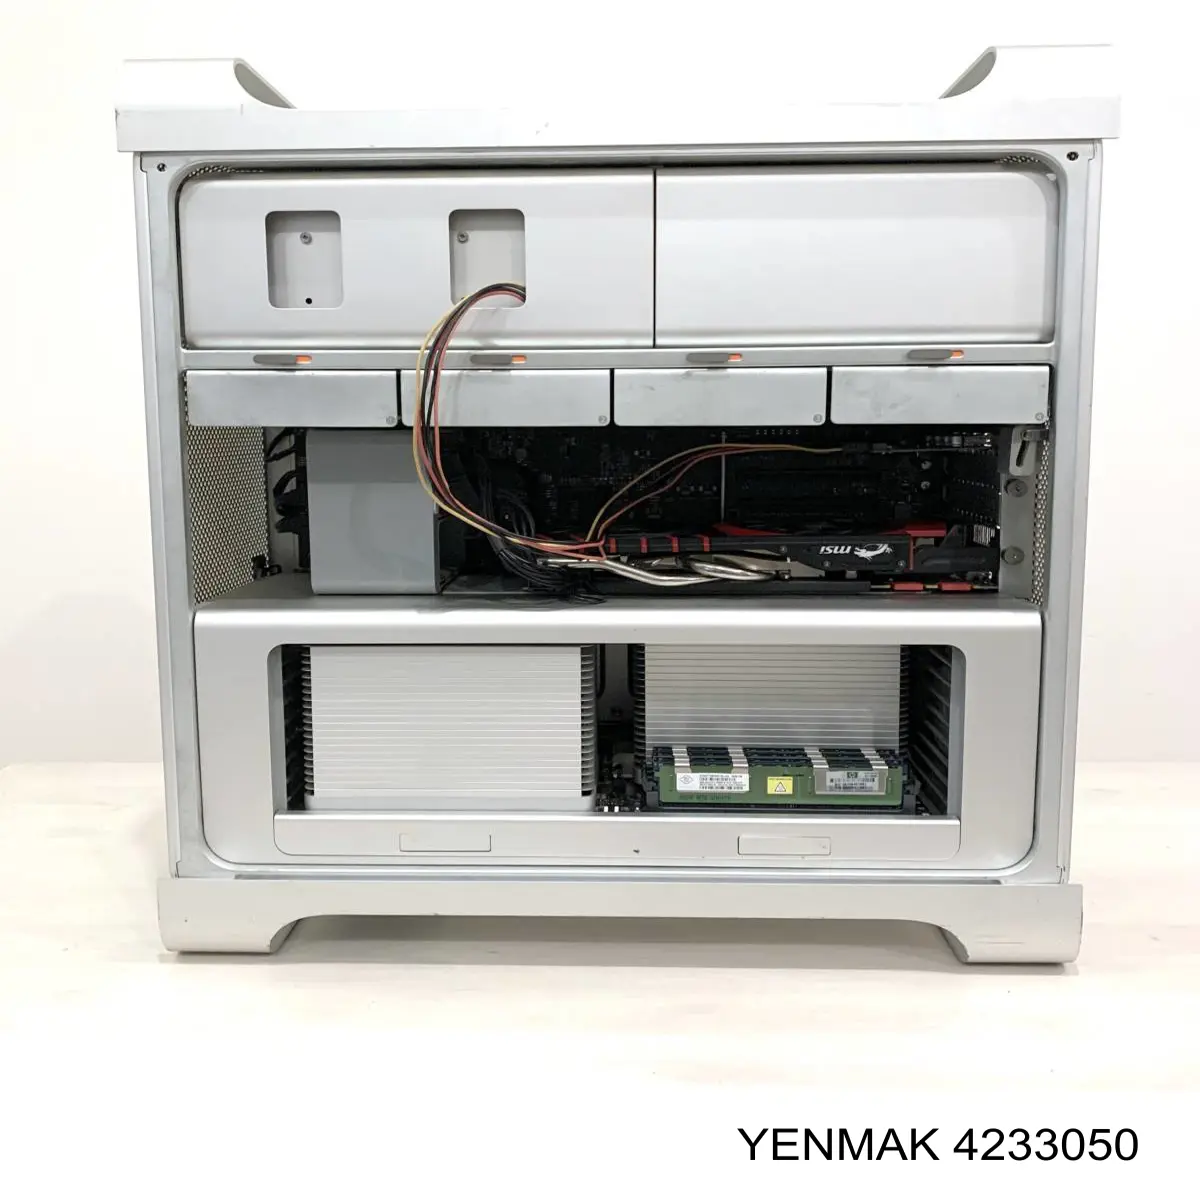 4233050 Yenmak поршень в комплекте на 1 цилиндр, 2-й ремонт (+0,50)